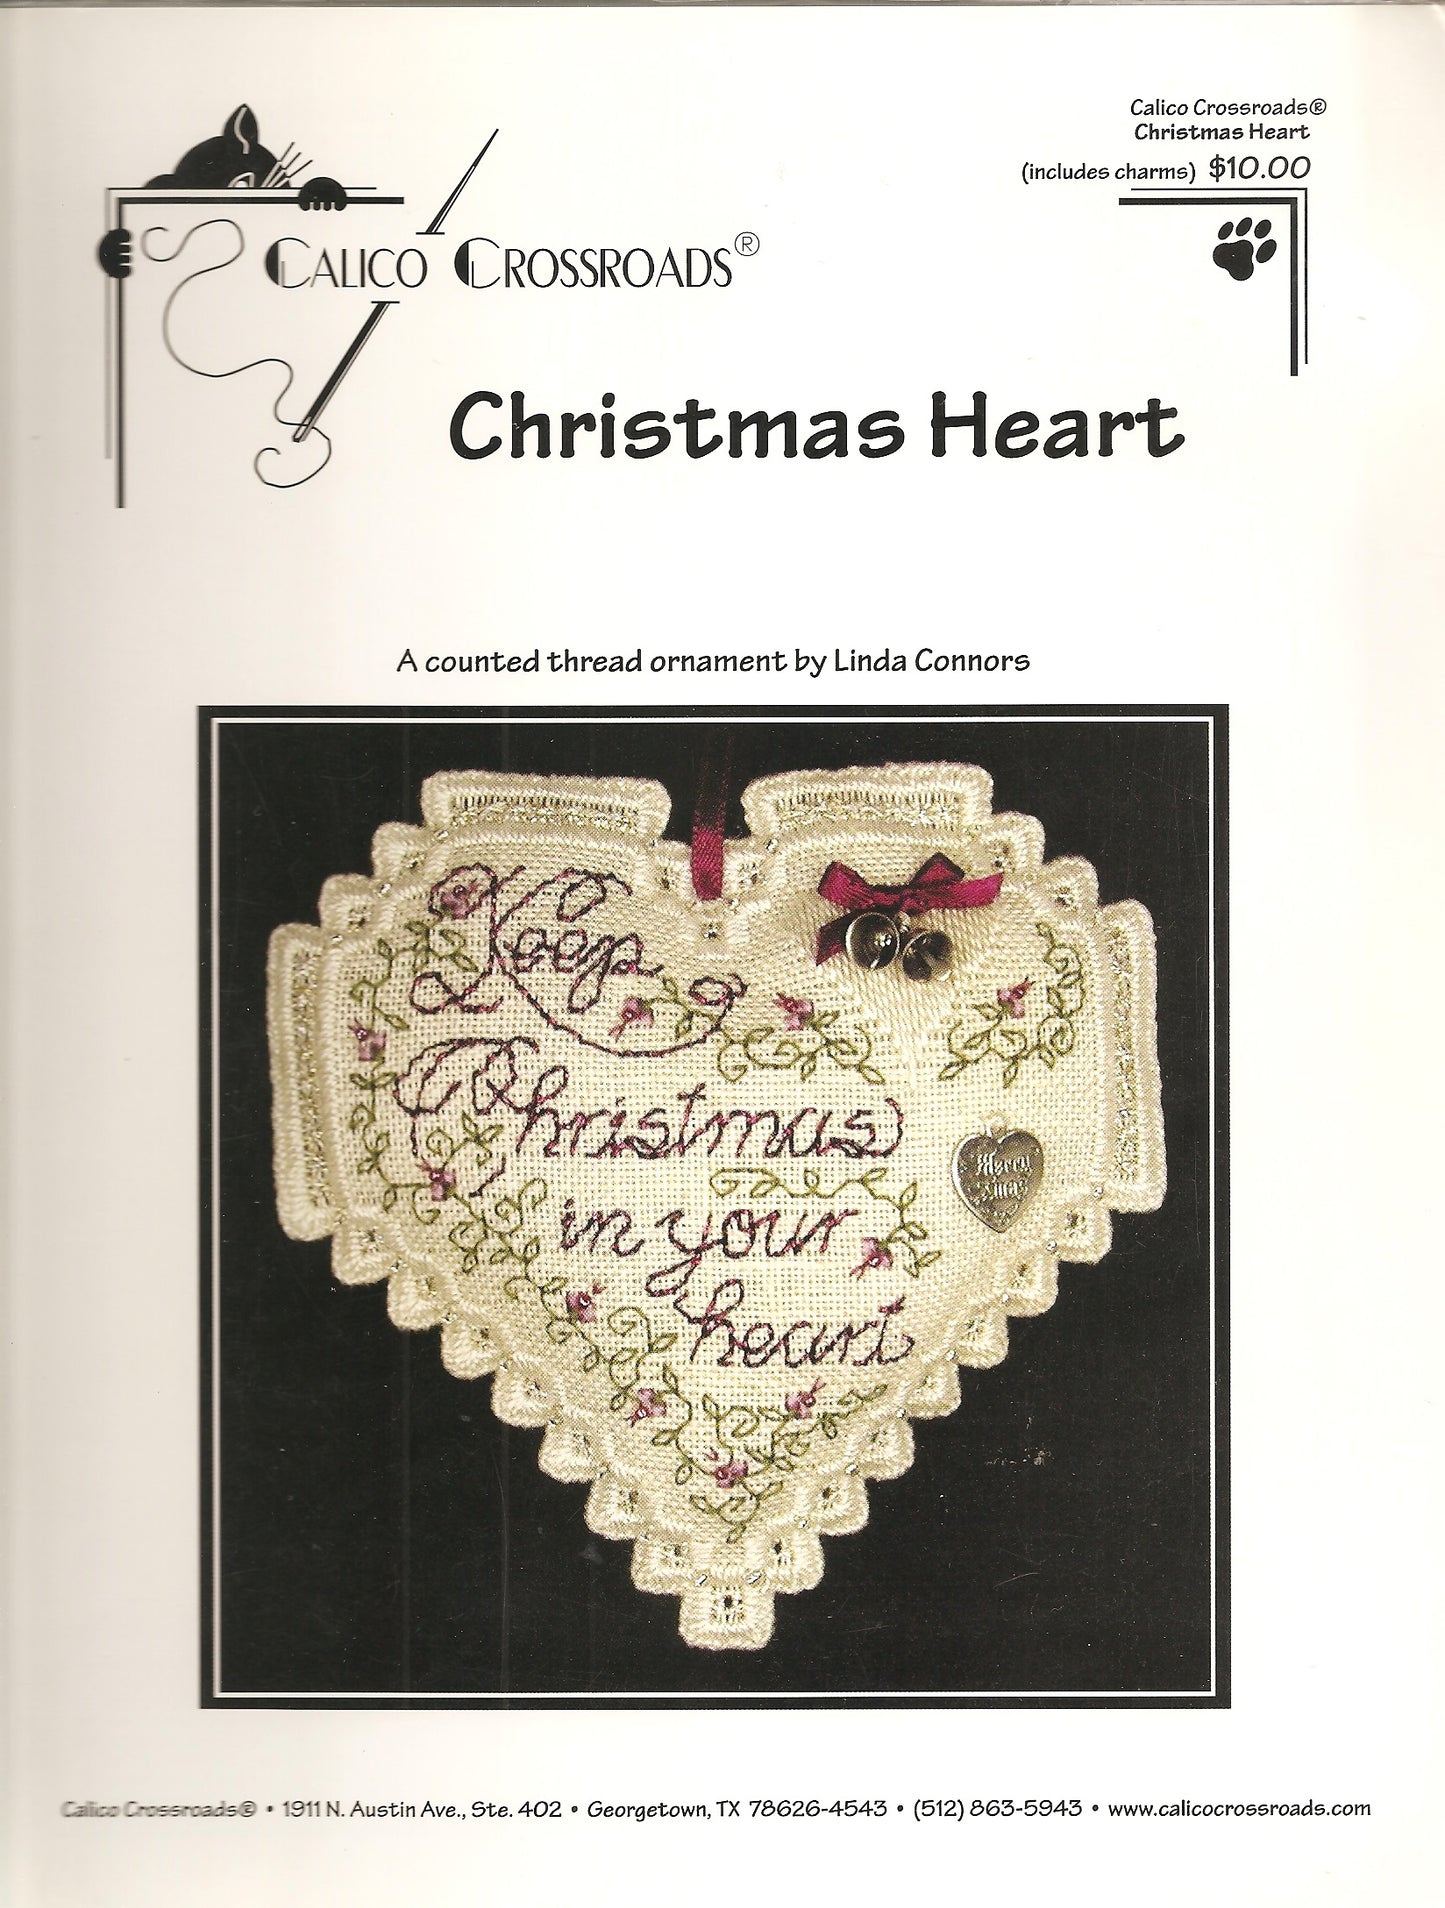 Calico Crossroads Christmas Heart ornament cross stitch pattern